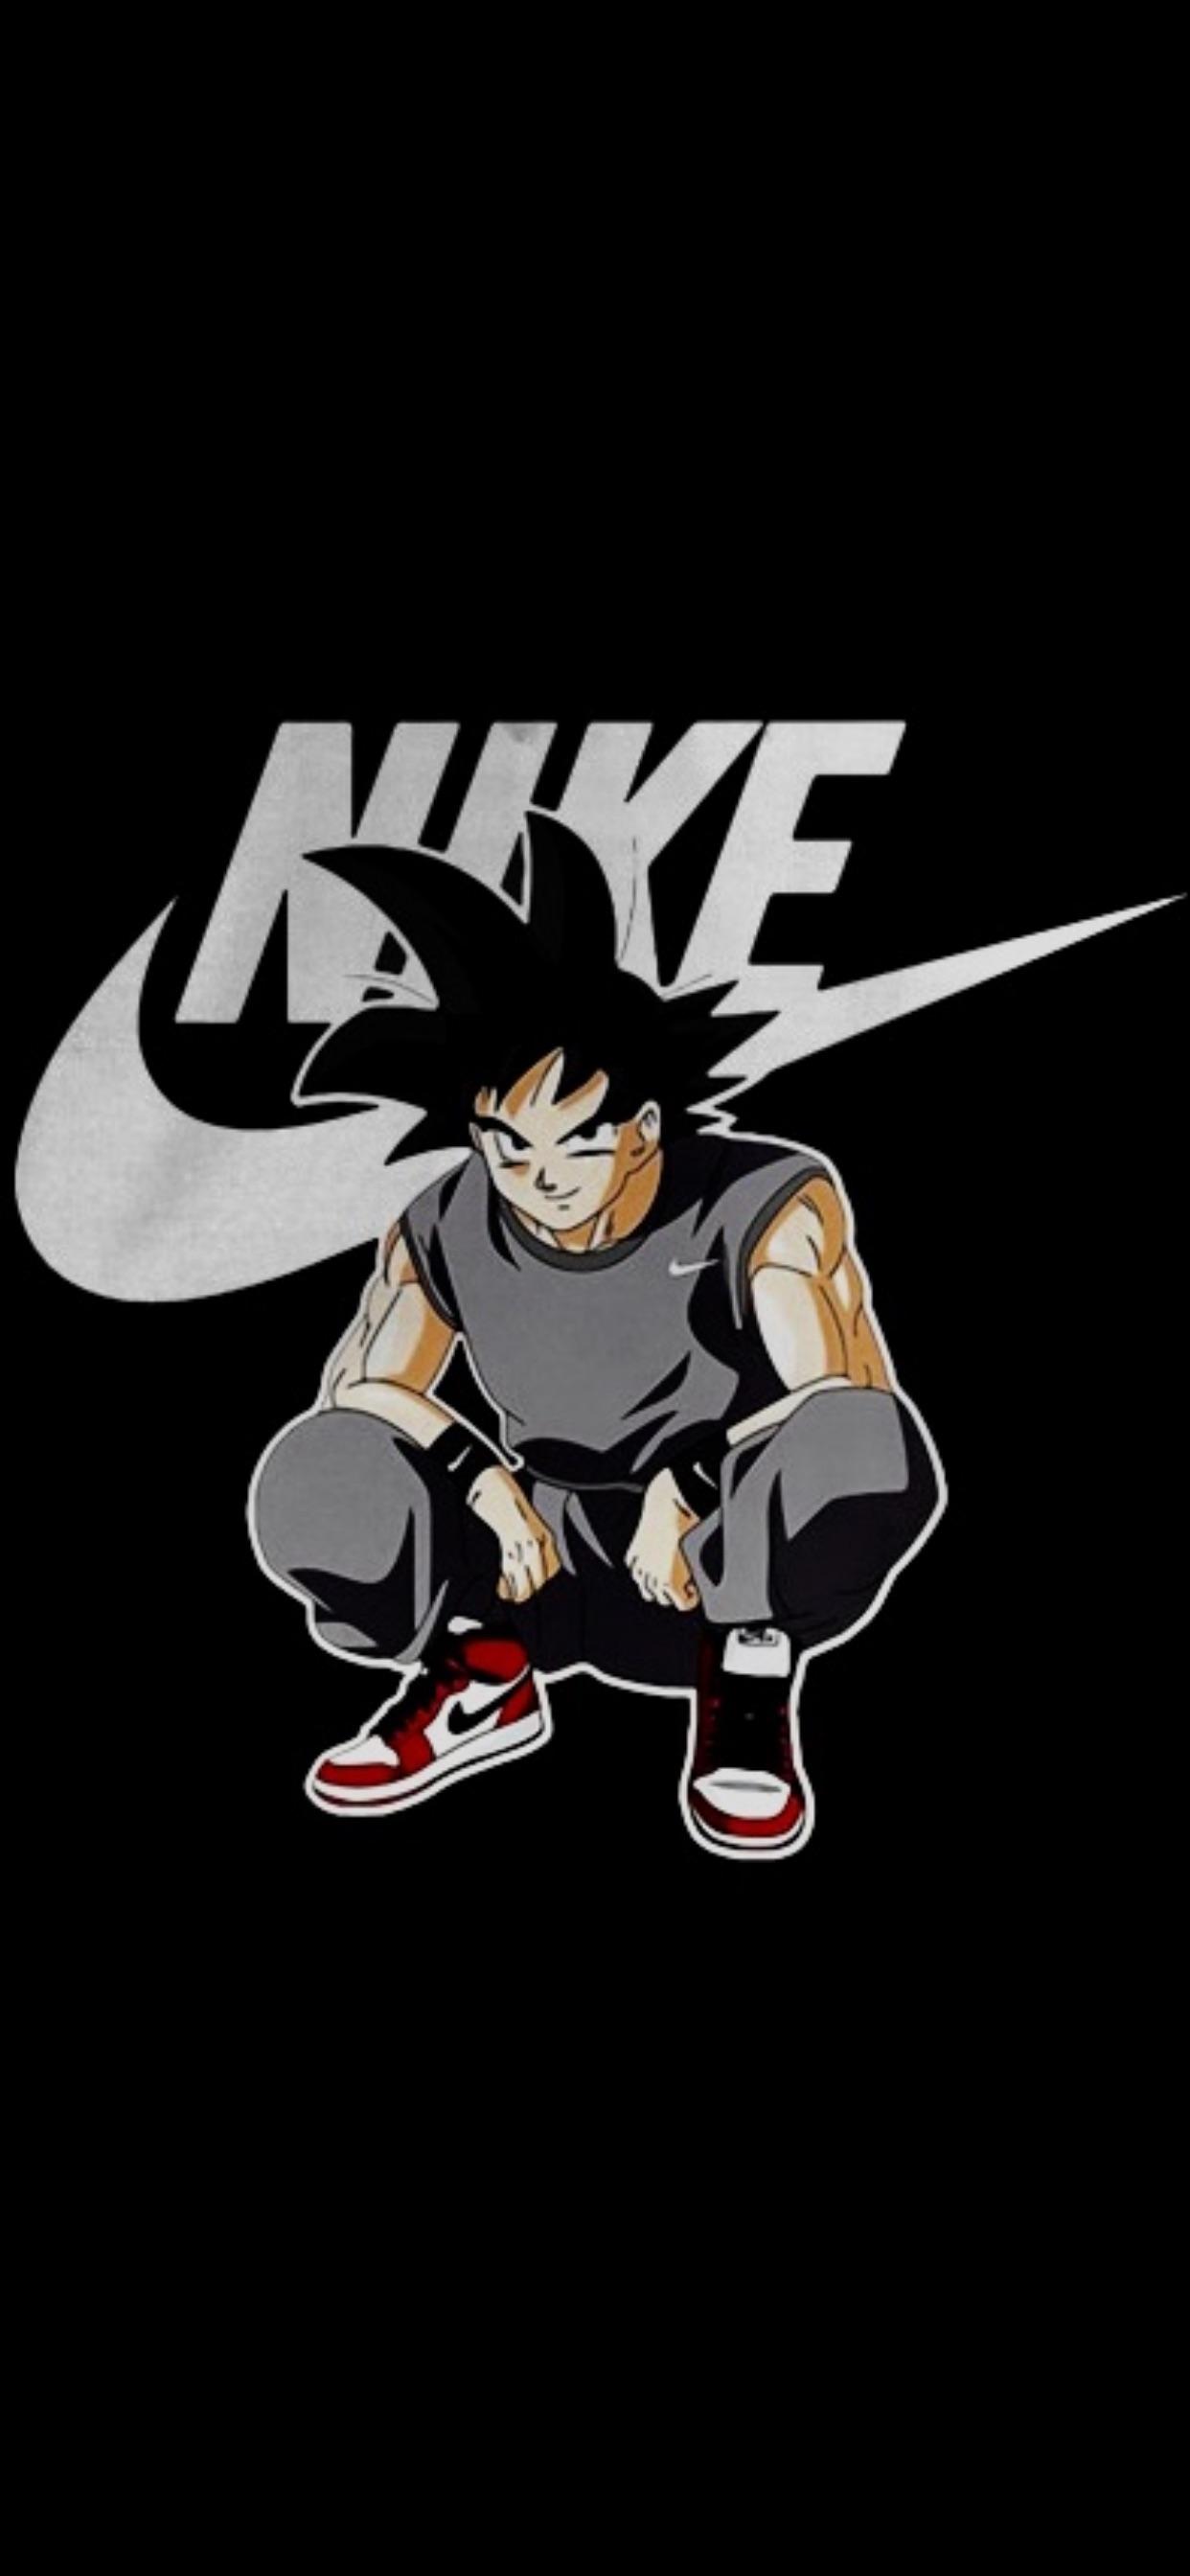 Goku Nike Wallpaper & Background Beautiful Best Available For Download Goku Nike Photo Free On Zicxa.com Image